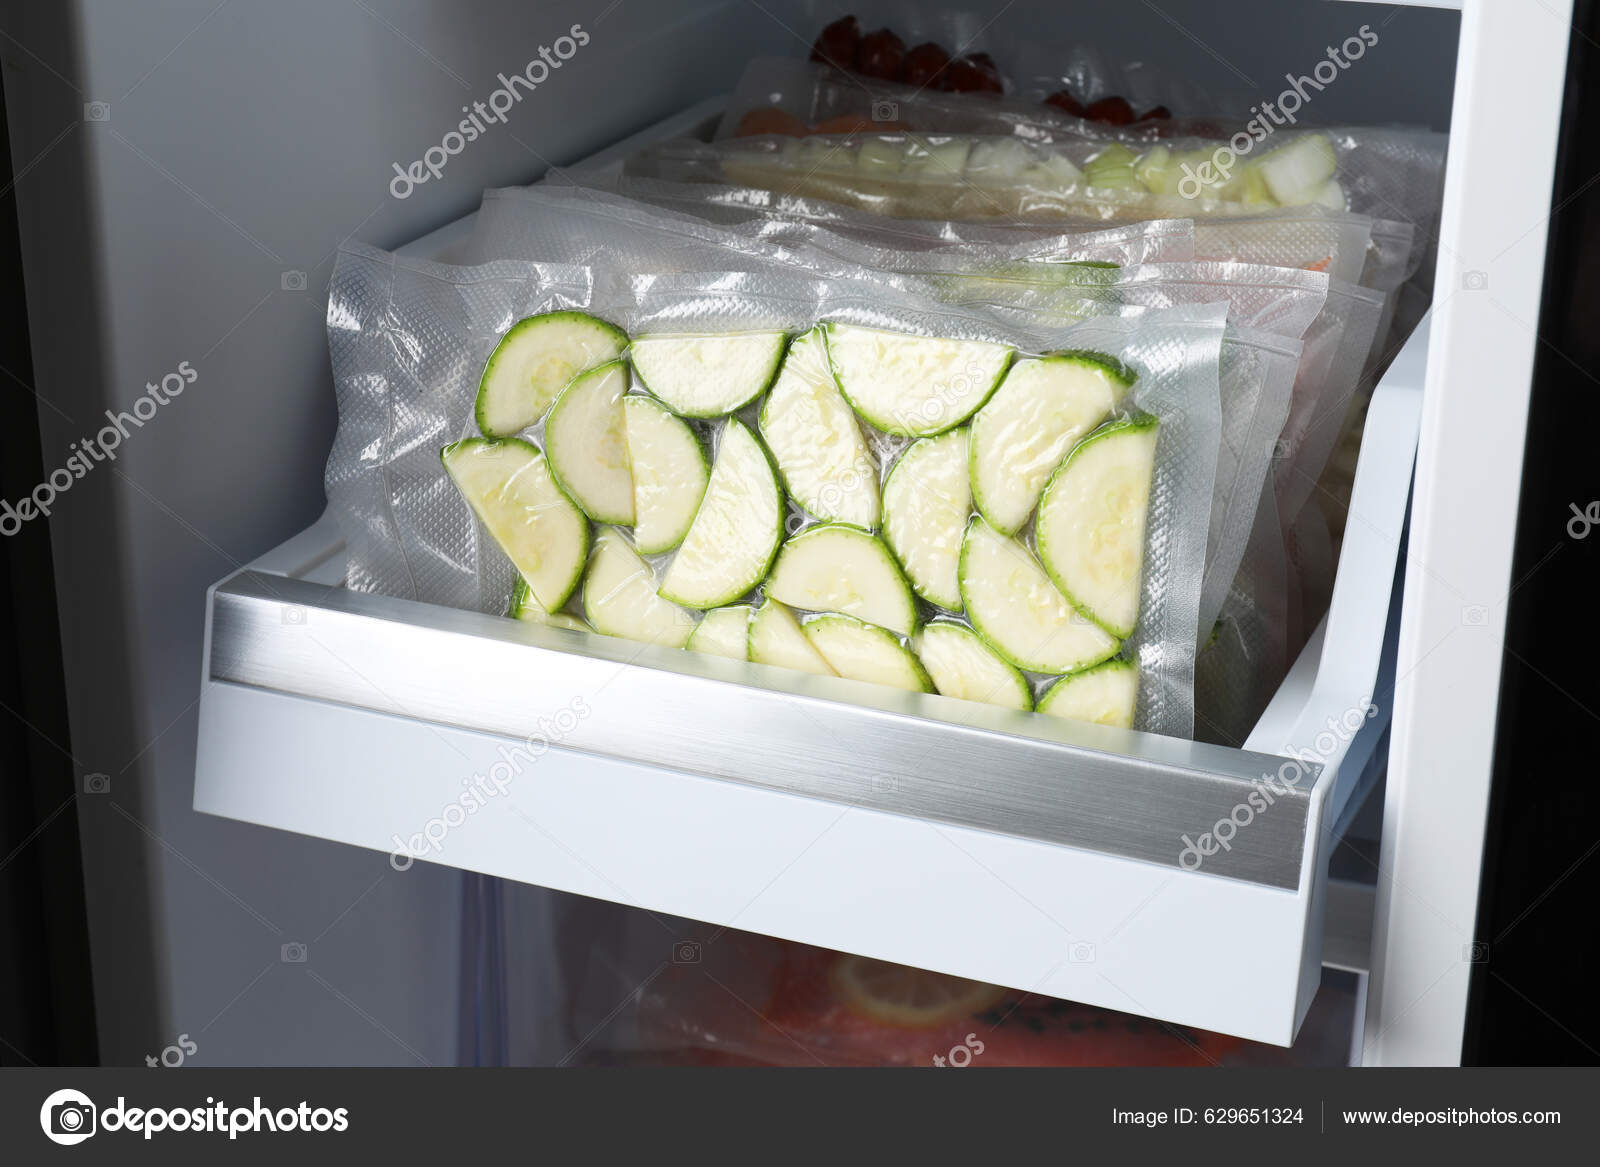 https://st5.depositphotos.com/16122460/62965/i/1600/depositphotos_629651324-stock-photo-vacuum-bags-different-products-fridge.jpg